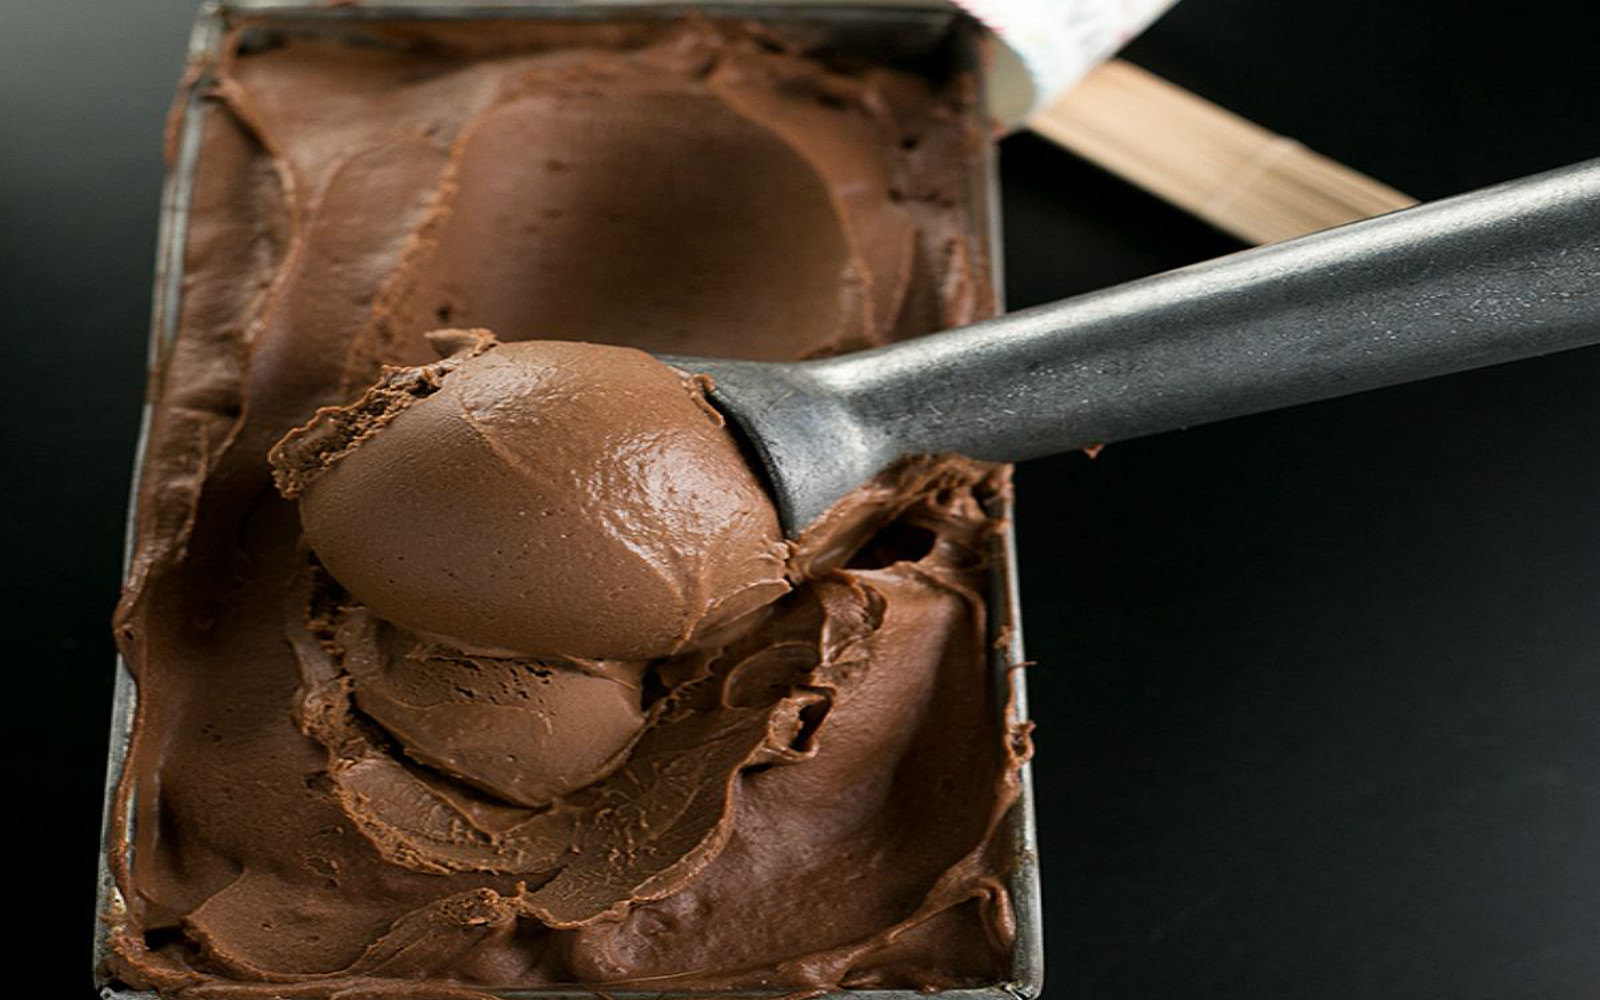 Scooping creamy chocolate ice cream